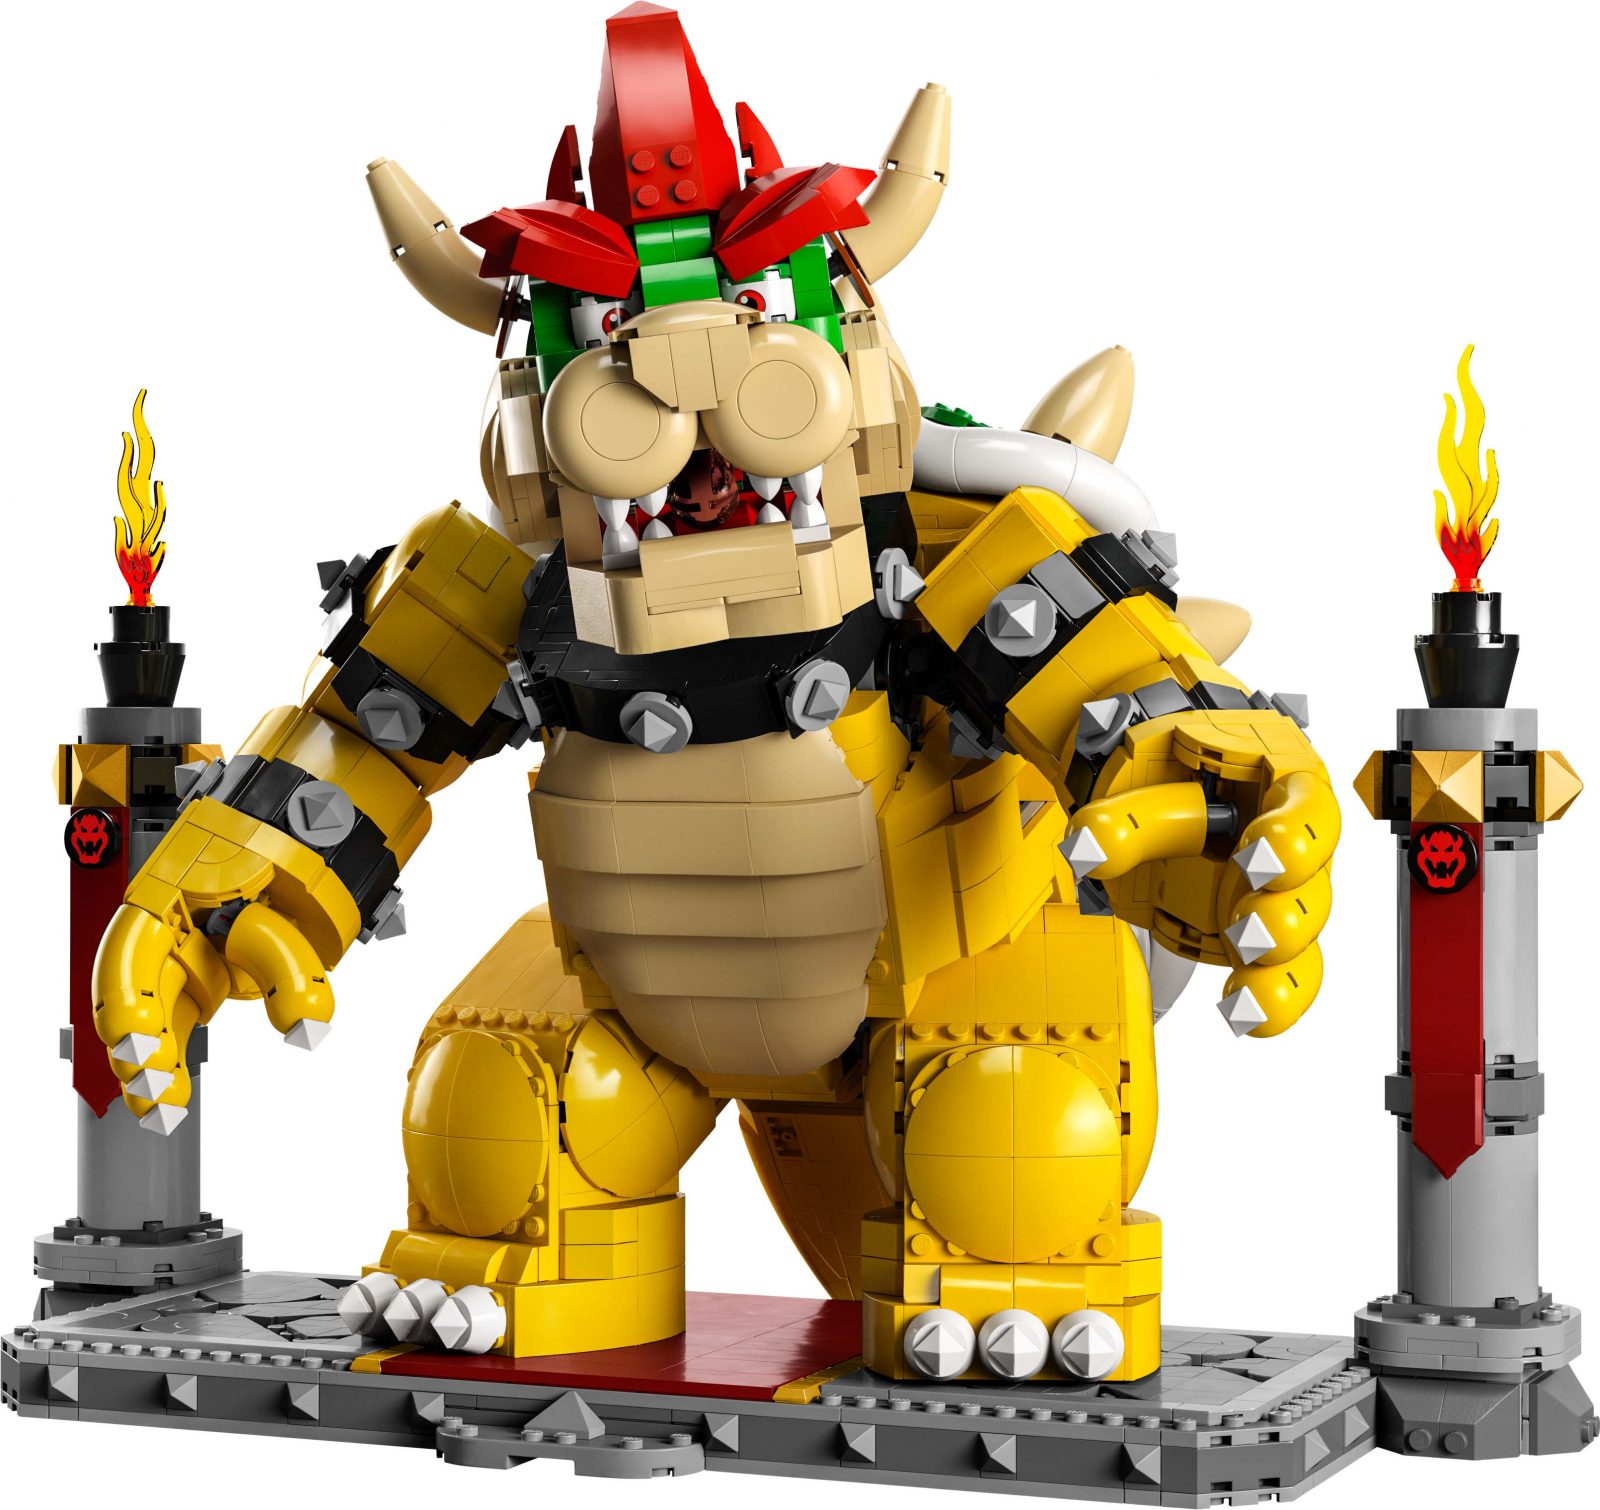 LEGO Super Mario Mighty Bowser 71411